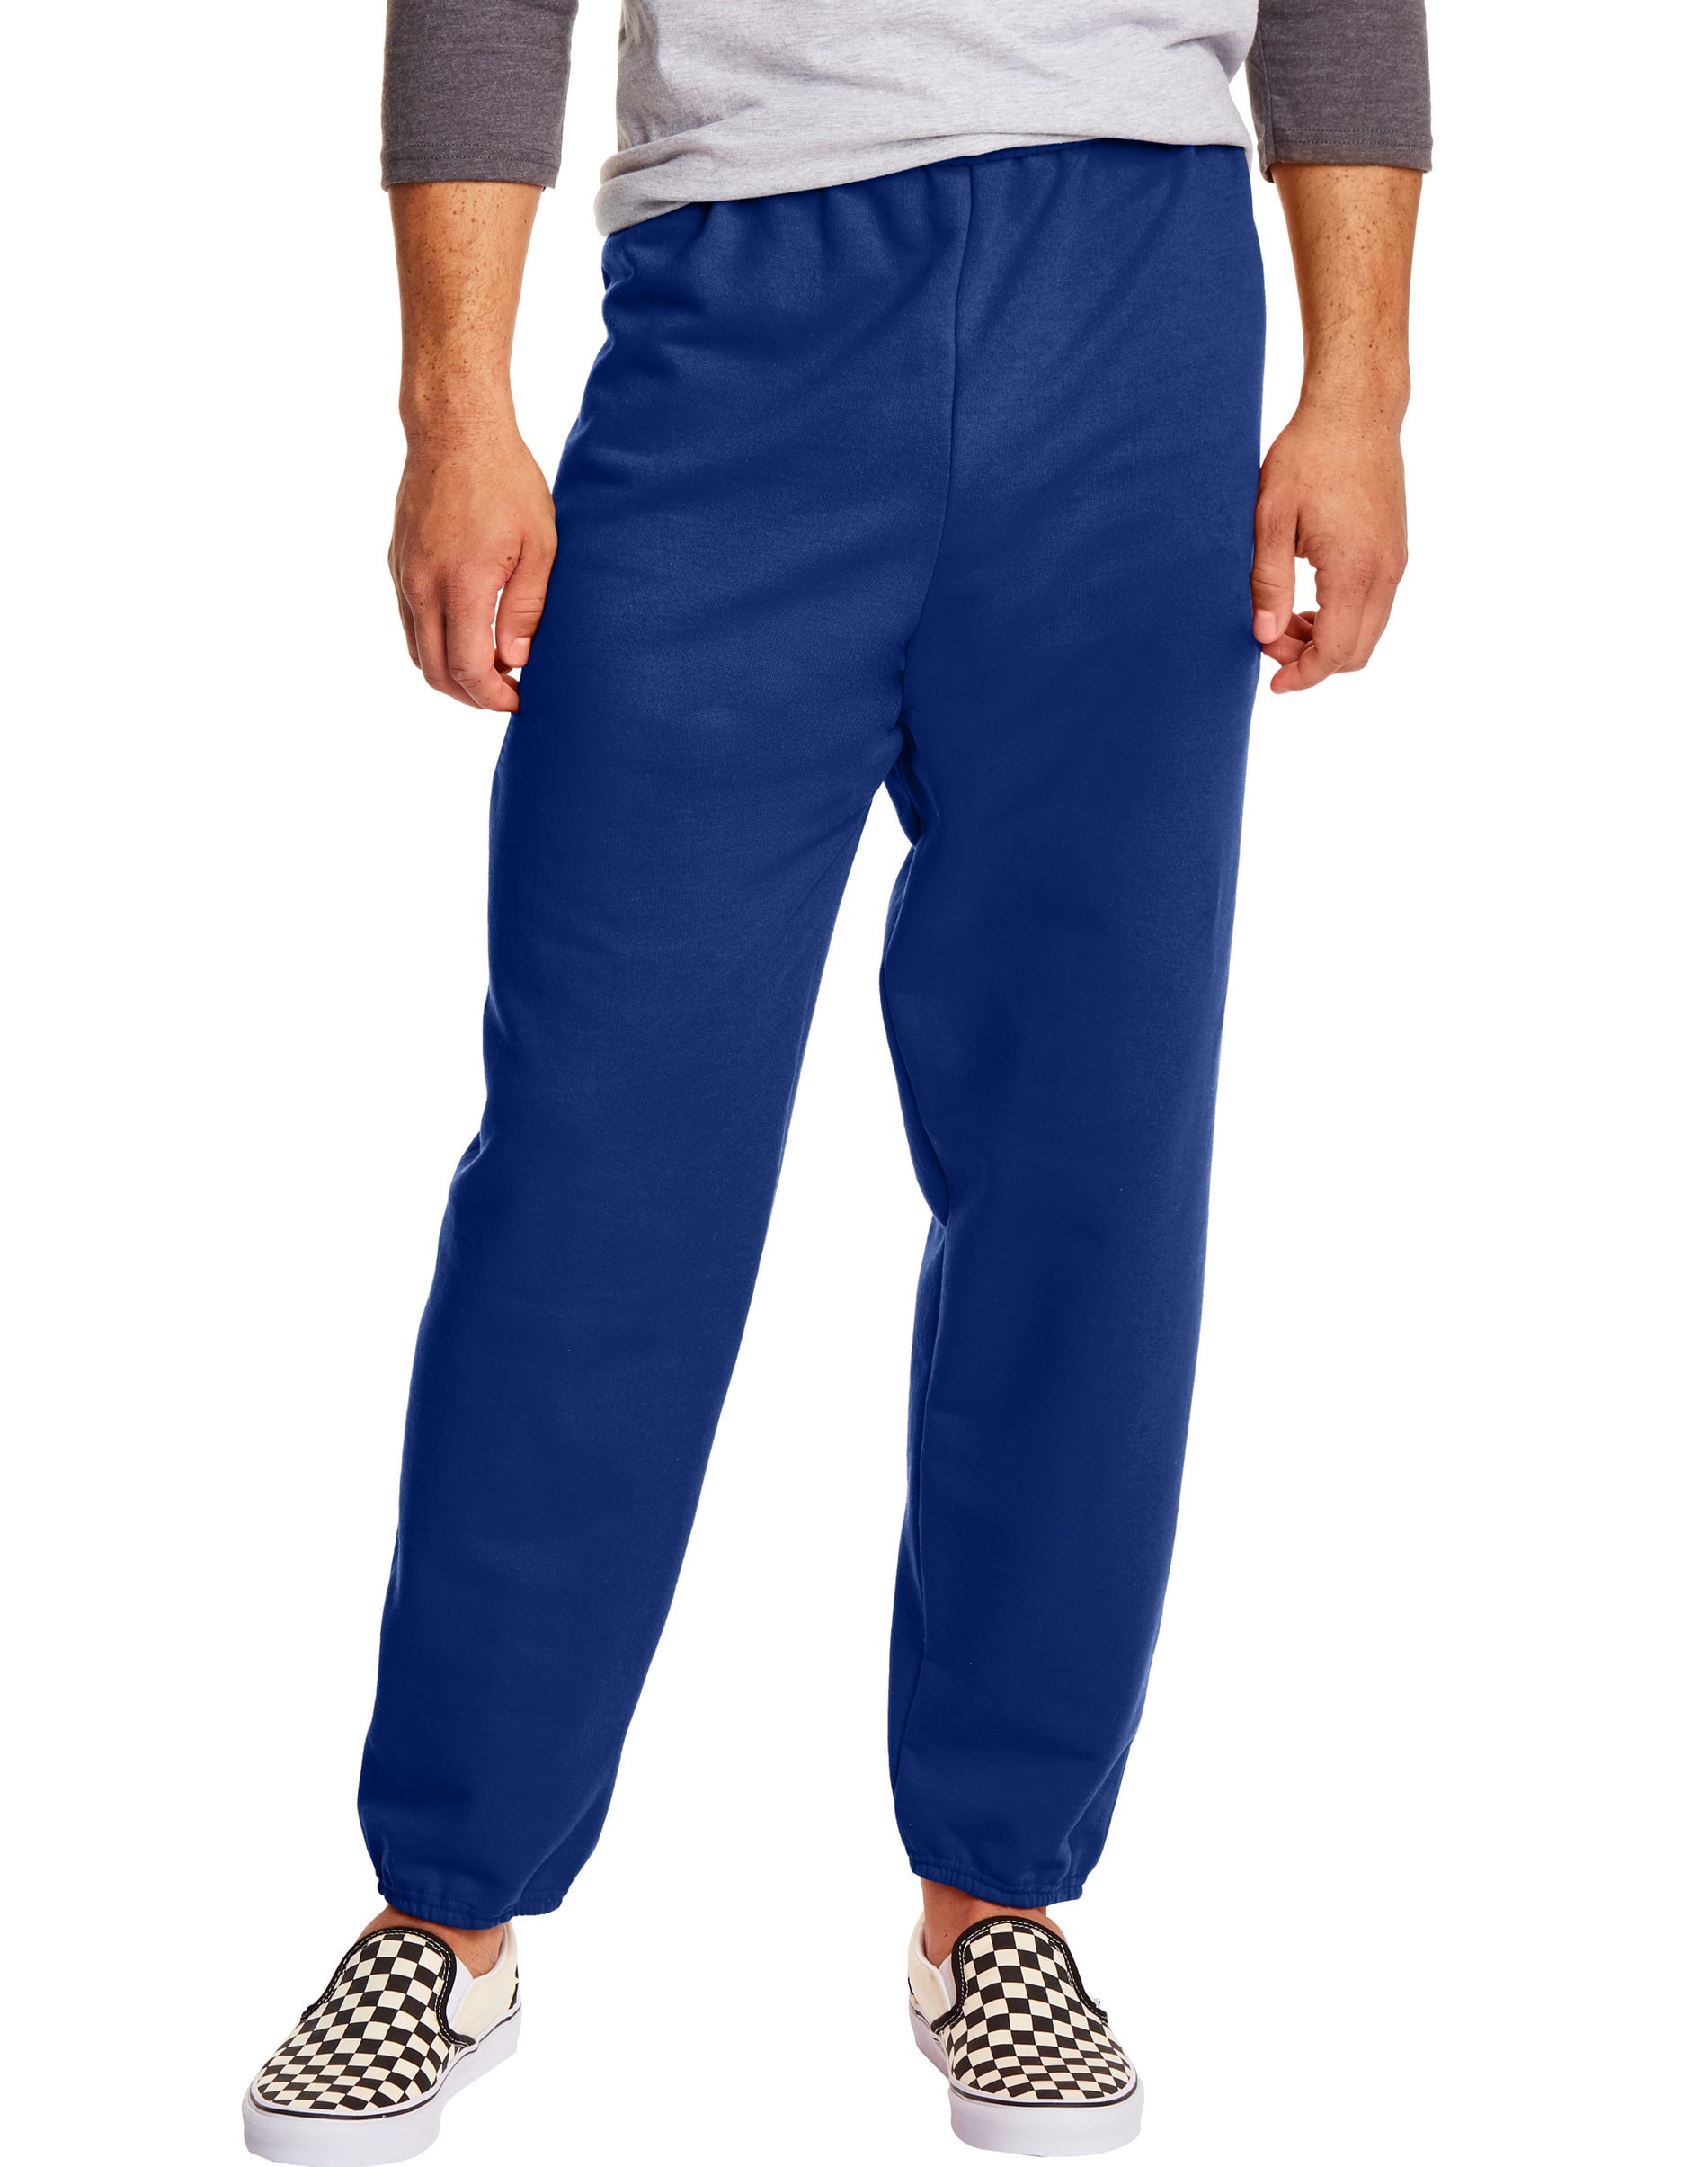 Hanes EcoSmart Men's Fleece Sweatpants, 2-Pack, 32 Deep Royal L